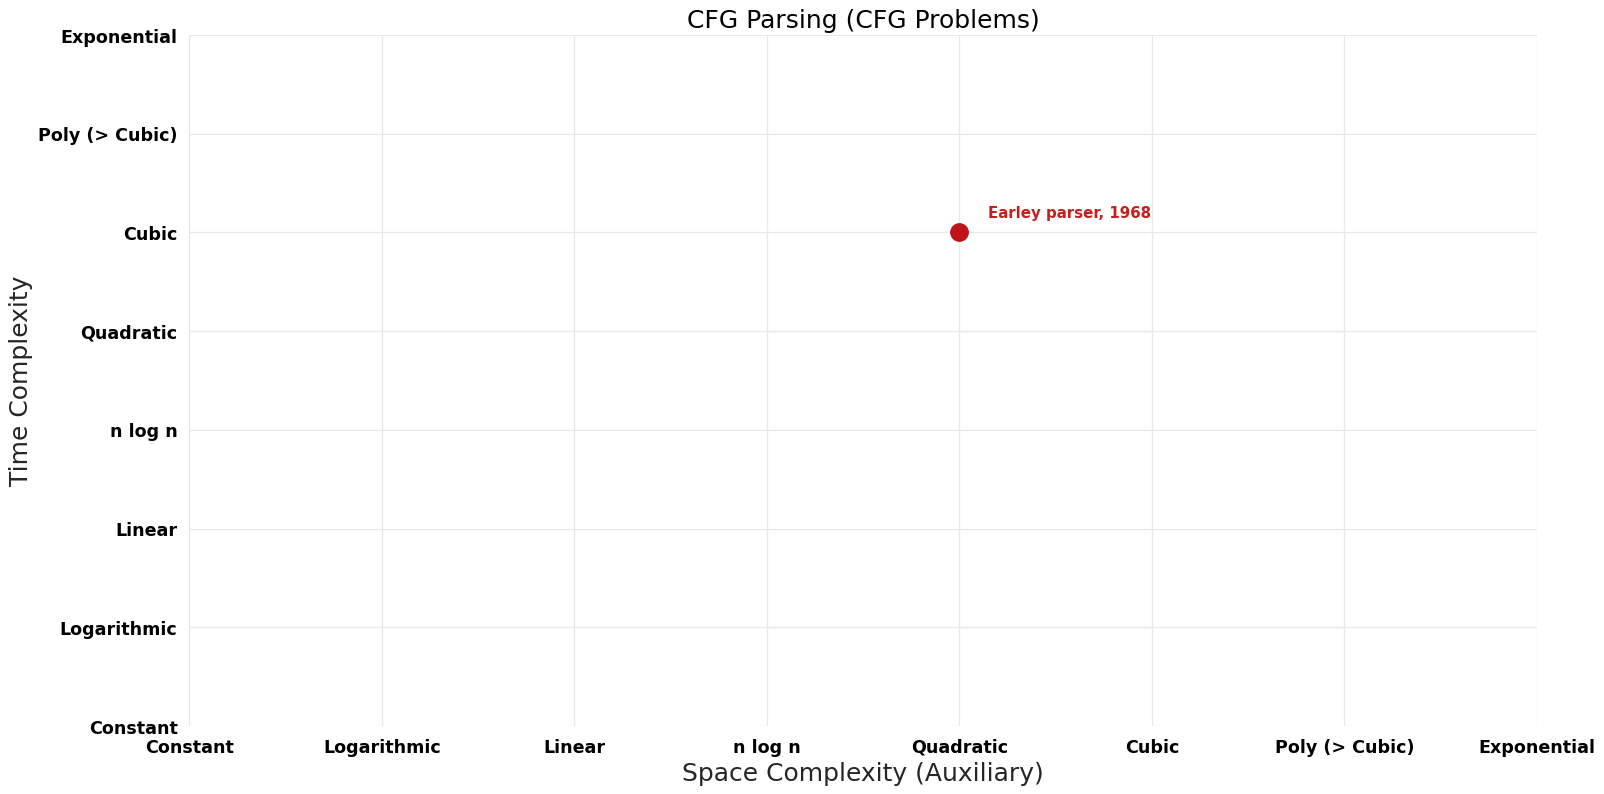 CFG Problems - CFG Parsing - Pareto Frontier.png